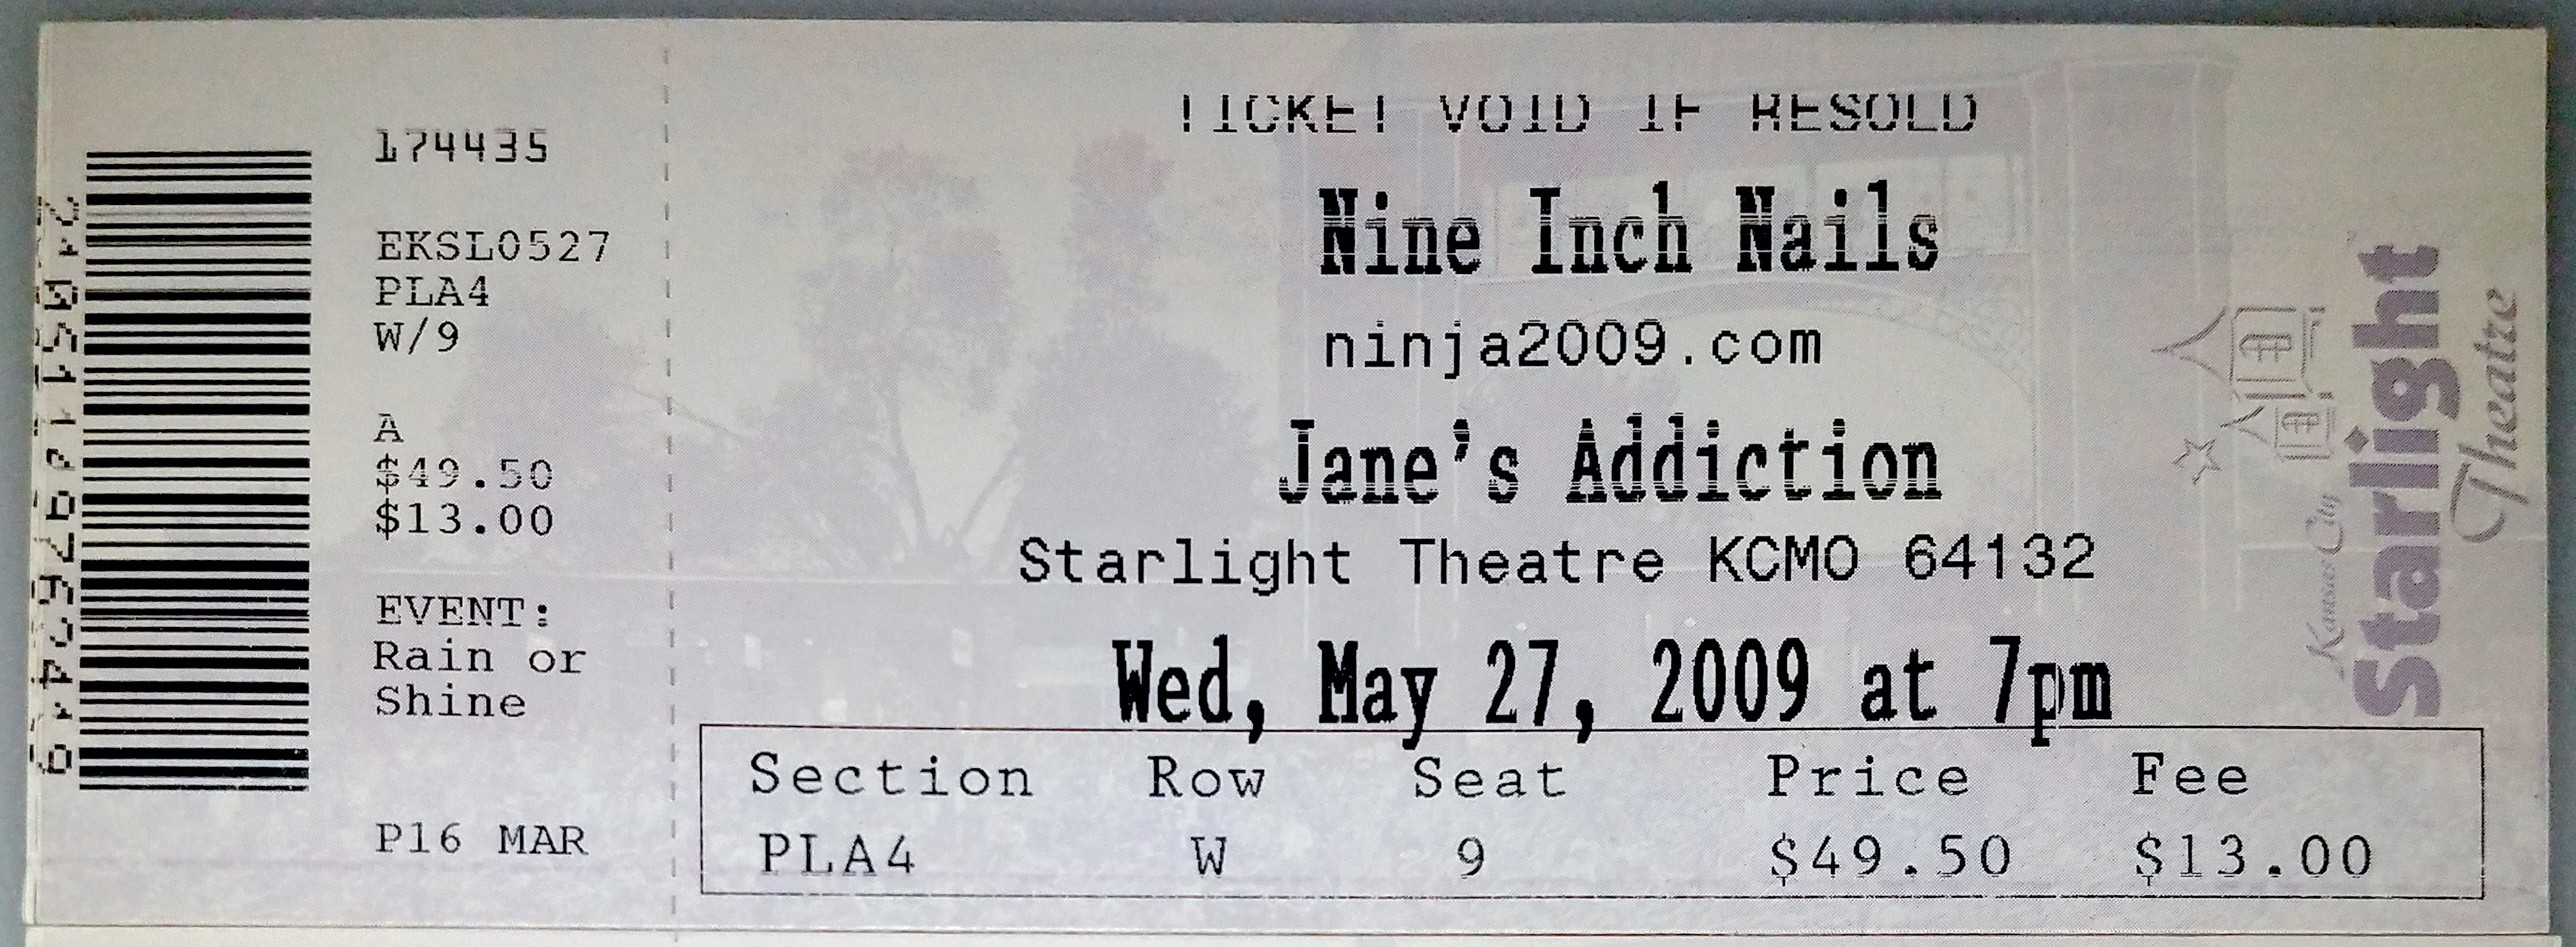 2009/05/27 Ticket